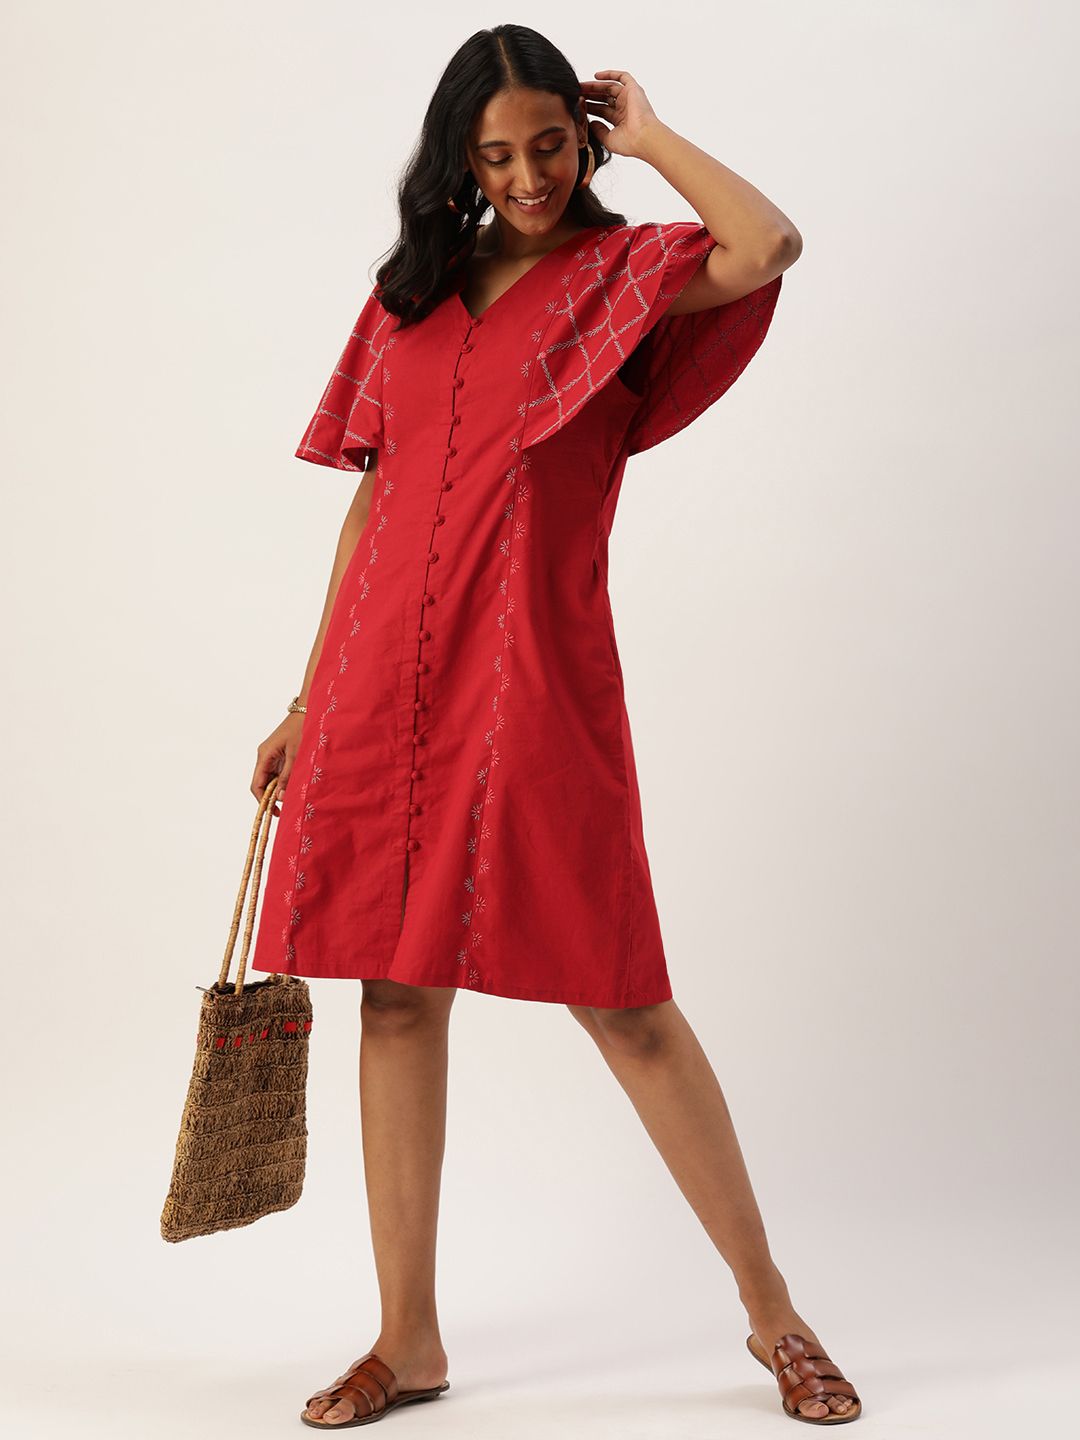 63% OFF on Harpa Women Red Embellished Shift Dress on Myntra